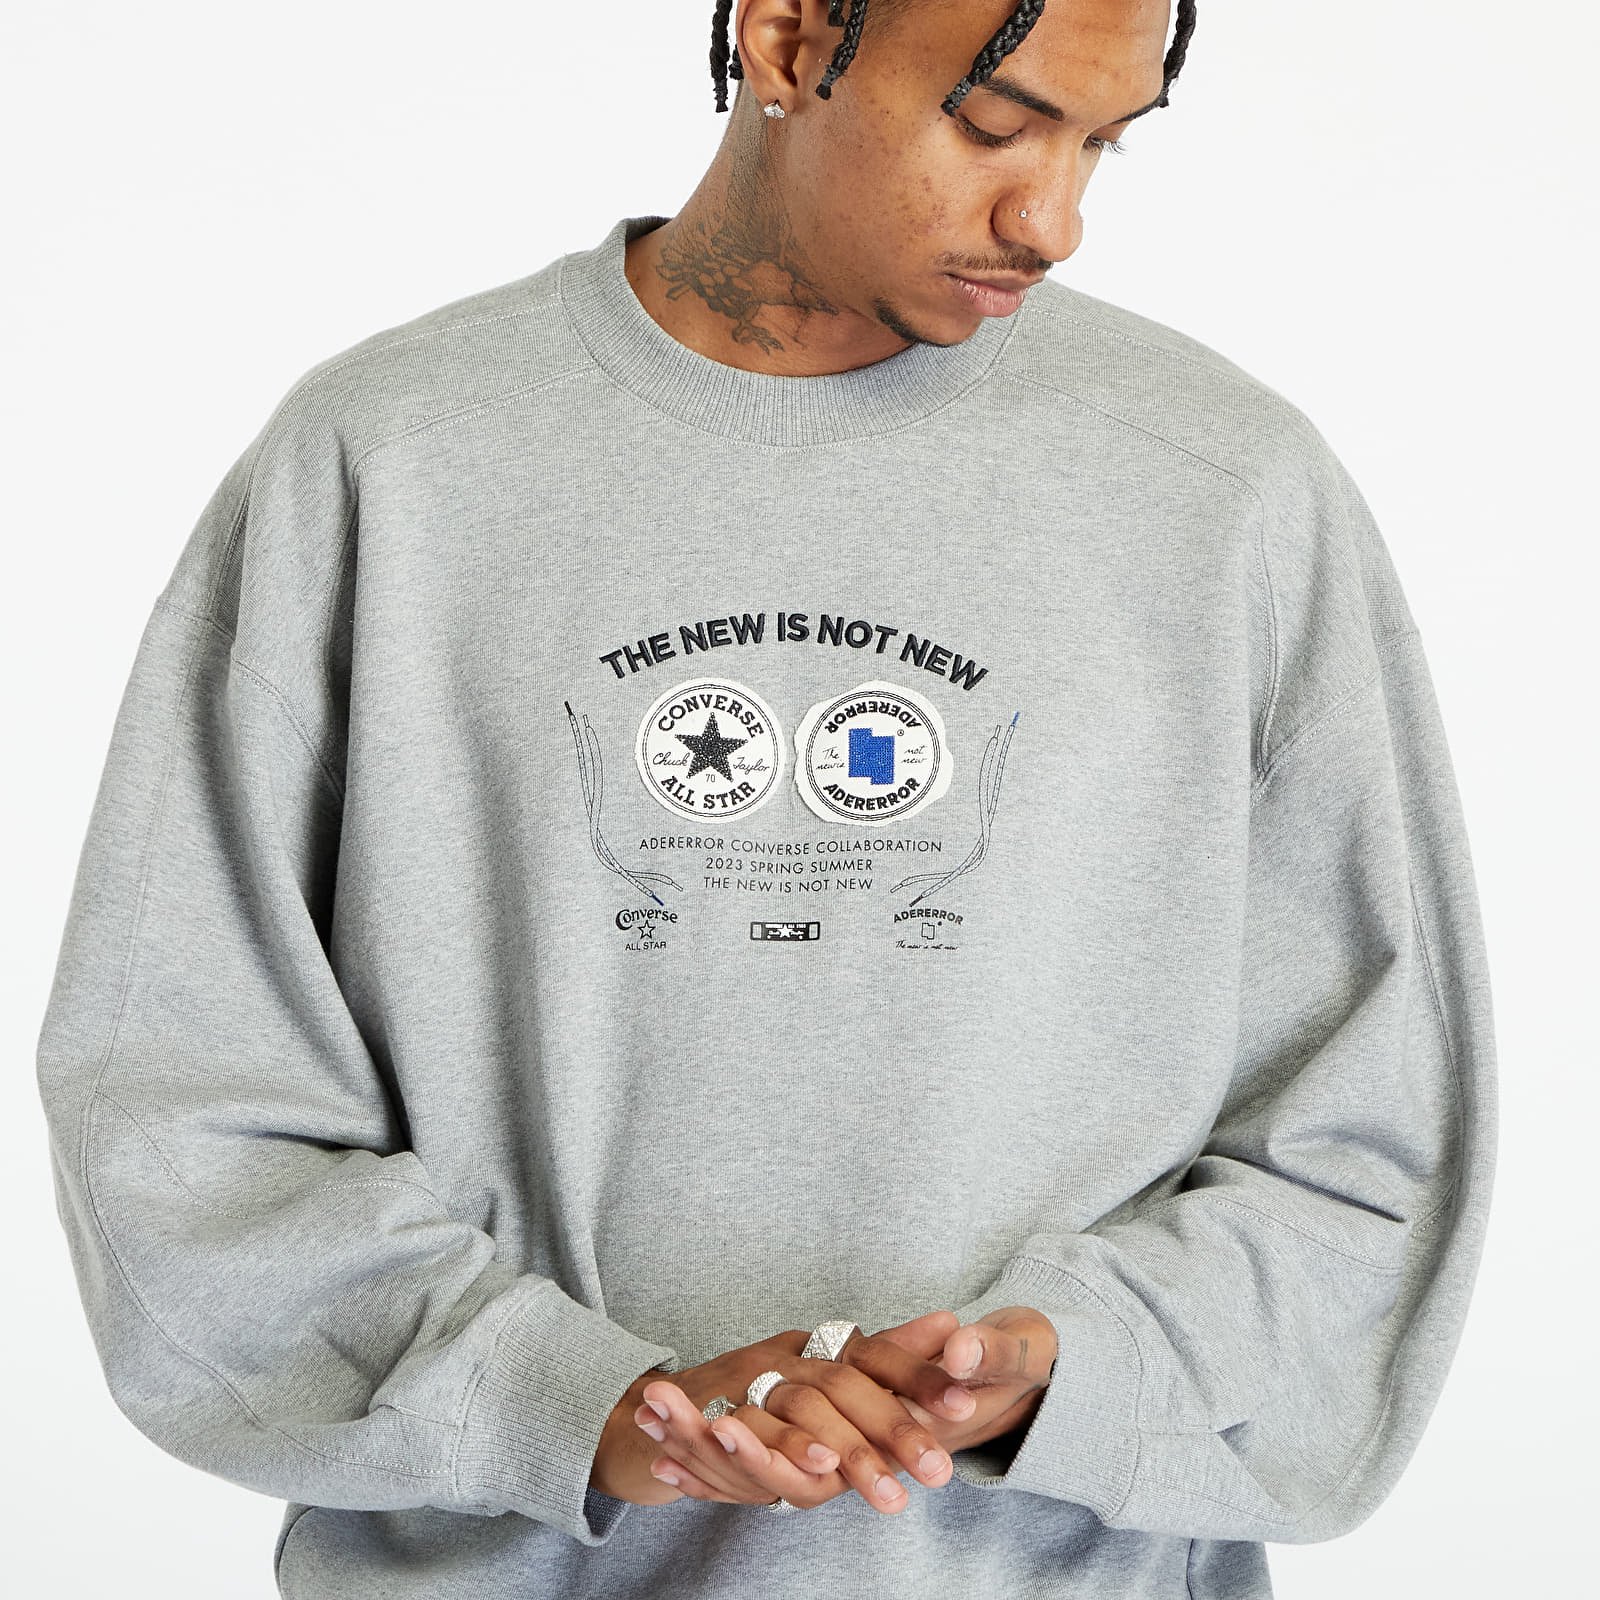 | x SHAPES ERROR ADER 10025818-A01 Vintage Sweater FLEXDOG Converse Crew